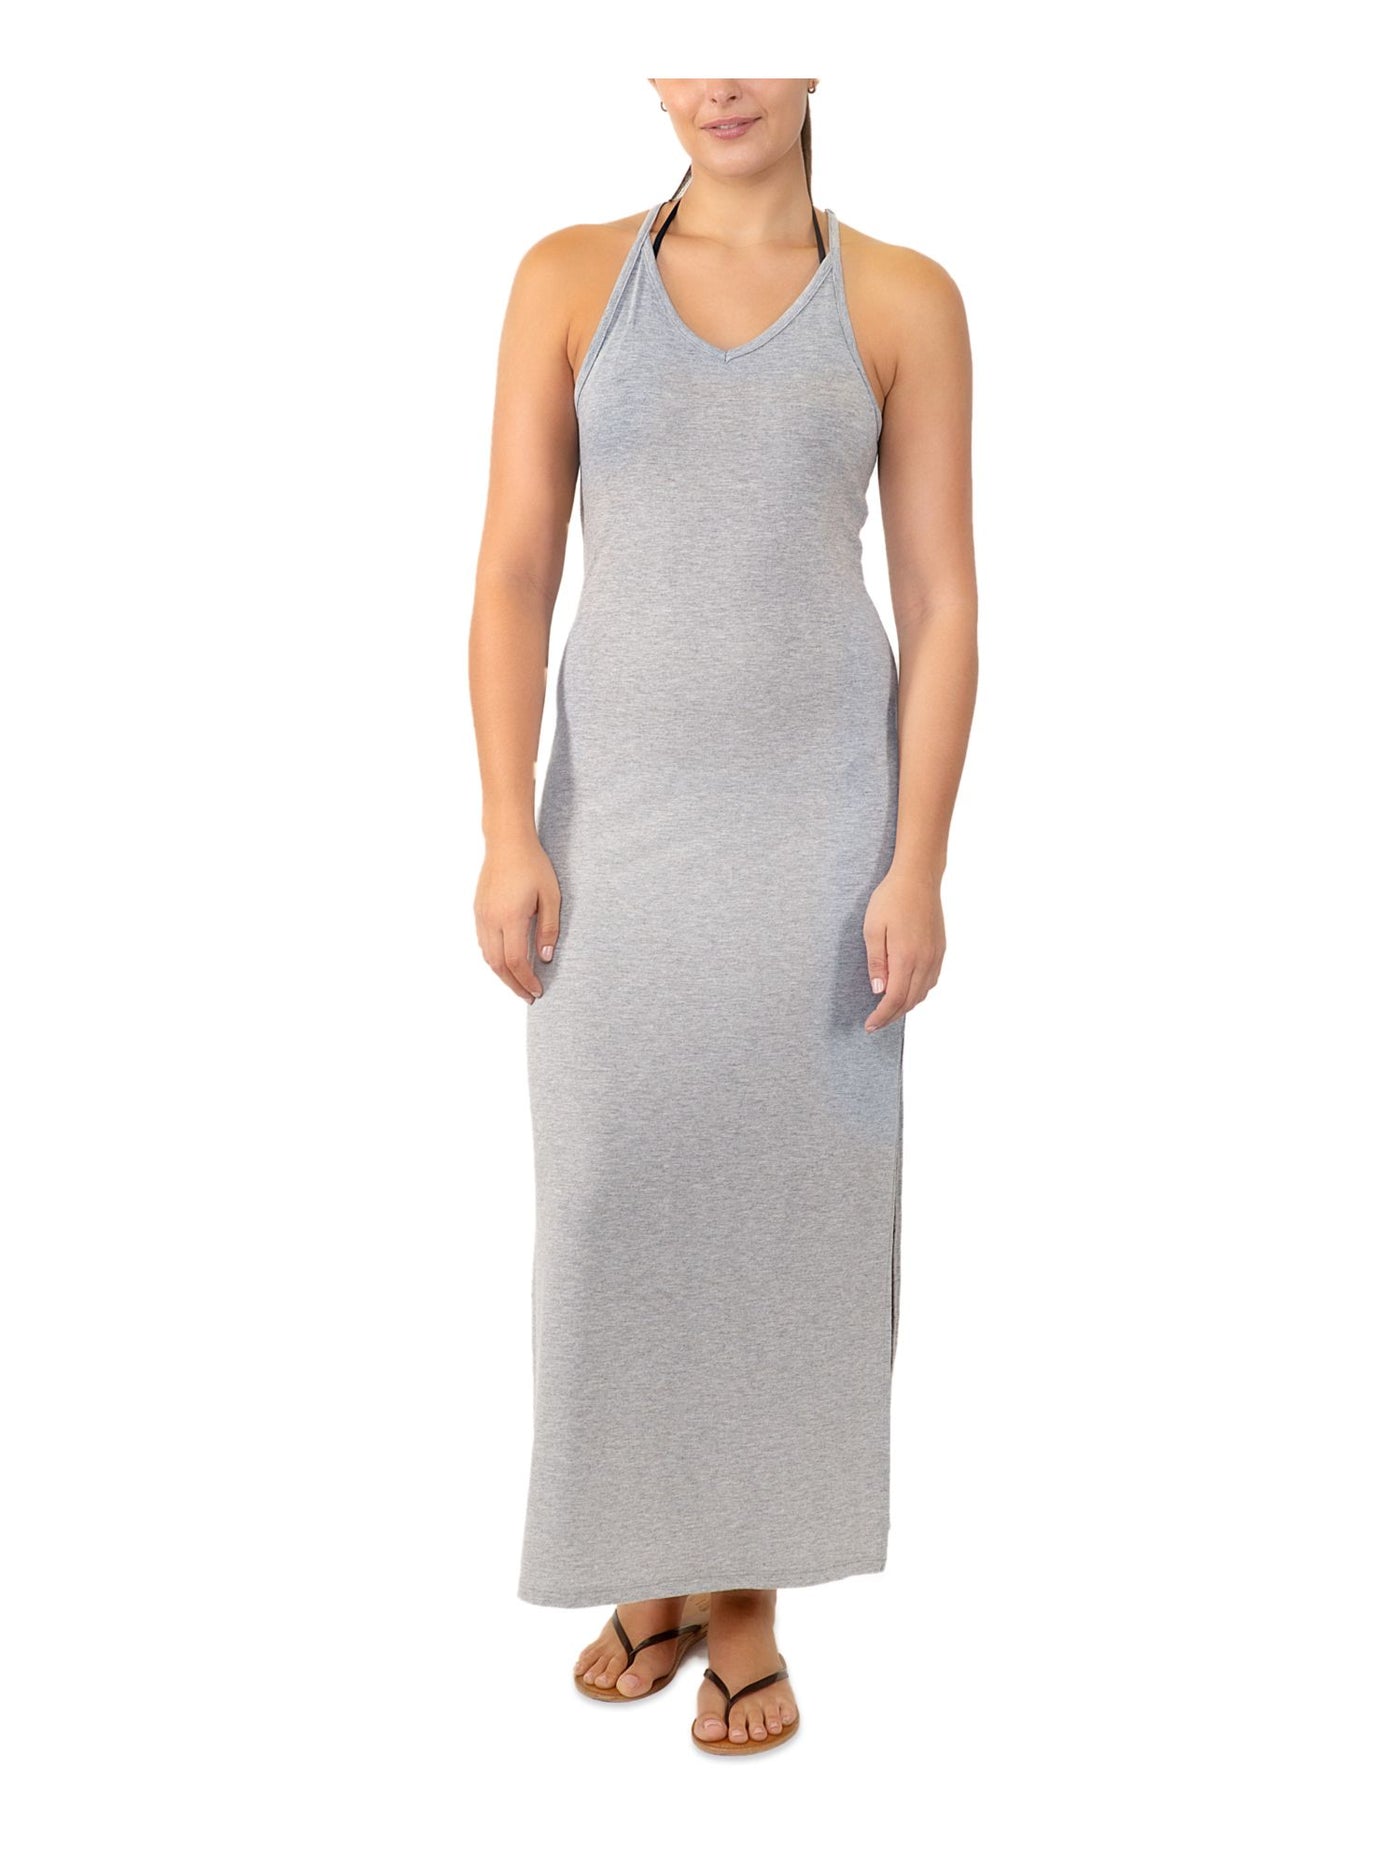 MIKEN SWIM Women's Gray Racerback Maxi Slit Dress Adjustable Deep V Neck Swimsuit Cover Up S